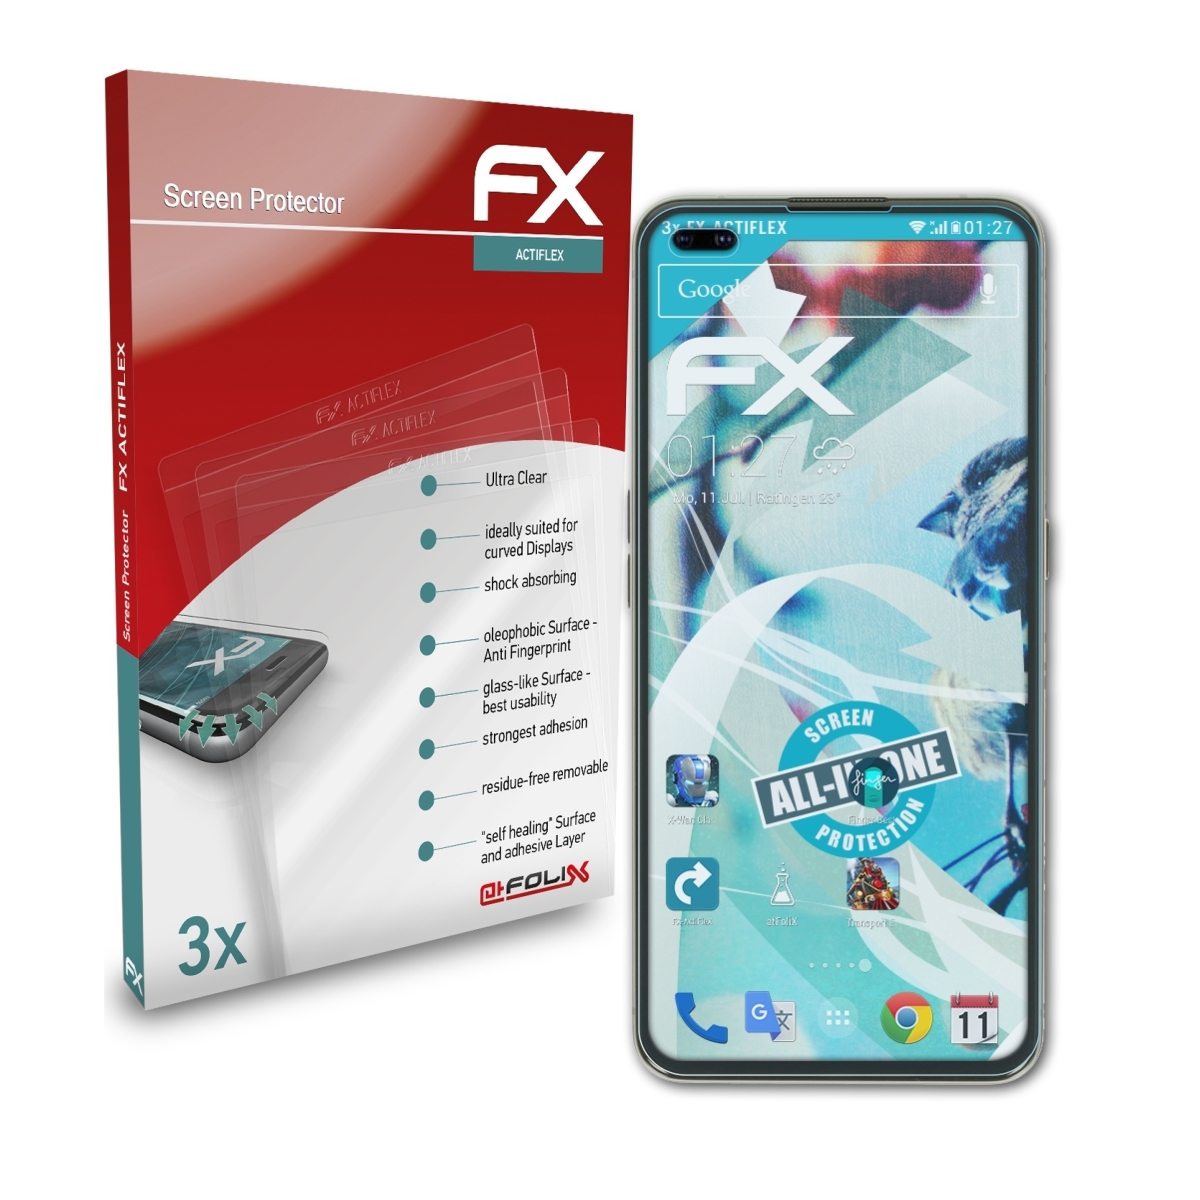 Pro 5G) FX-ActiFleX X50 ATFOLIX Realme Displayschutz(für 3x